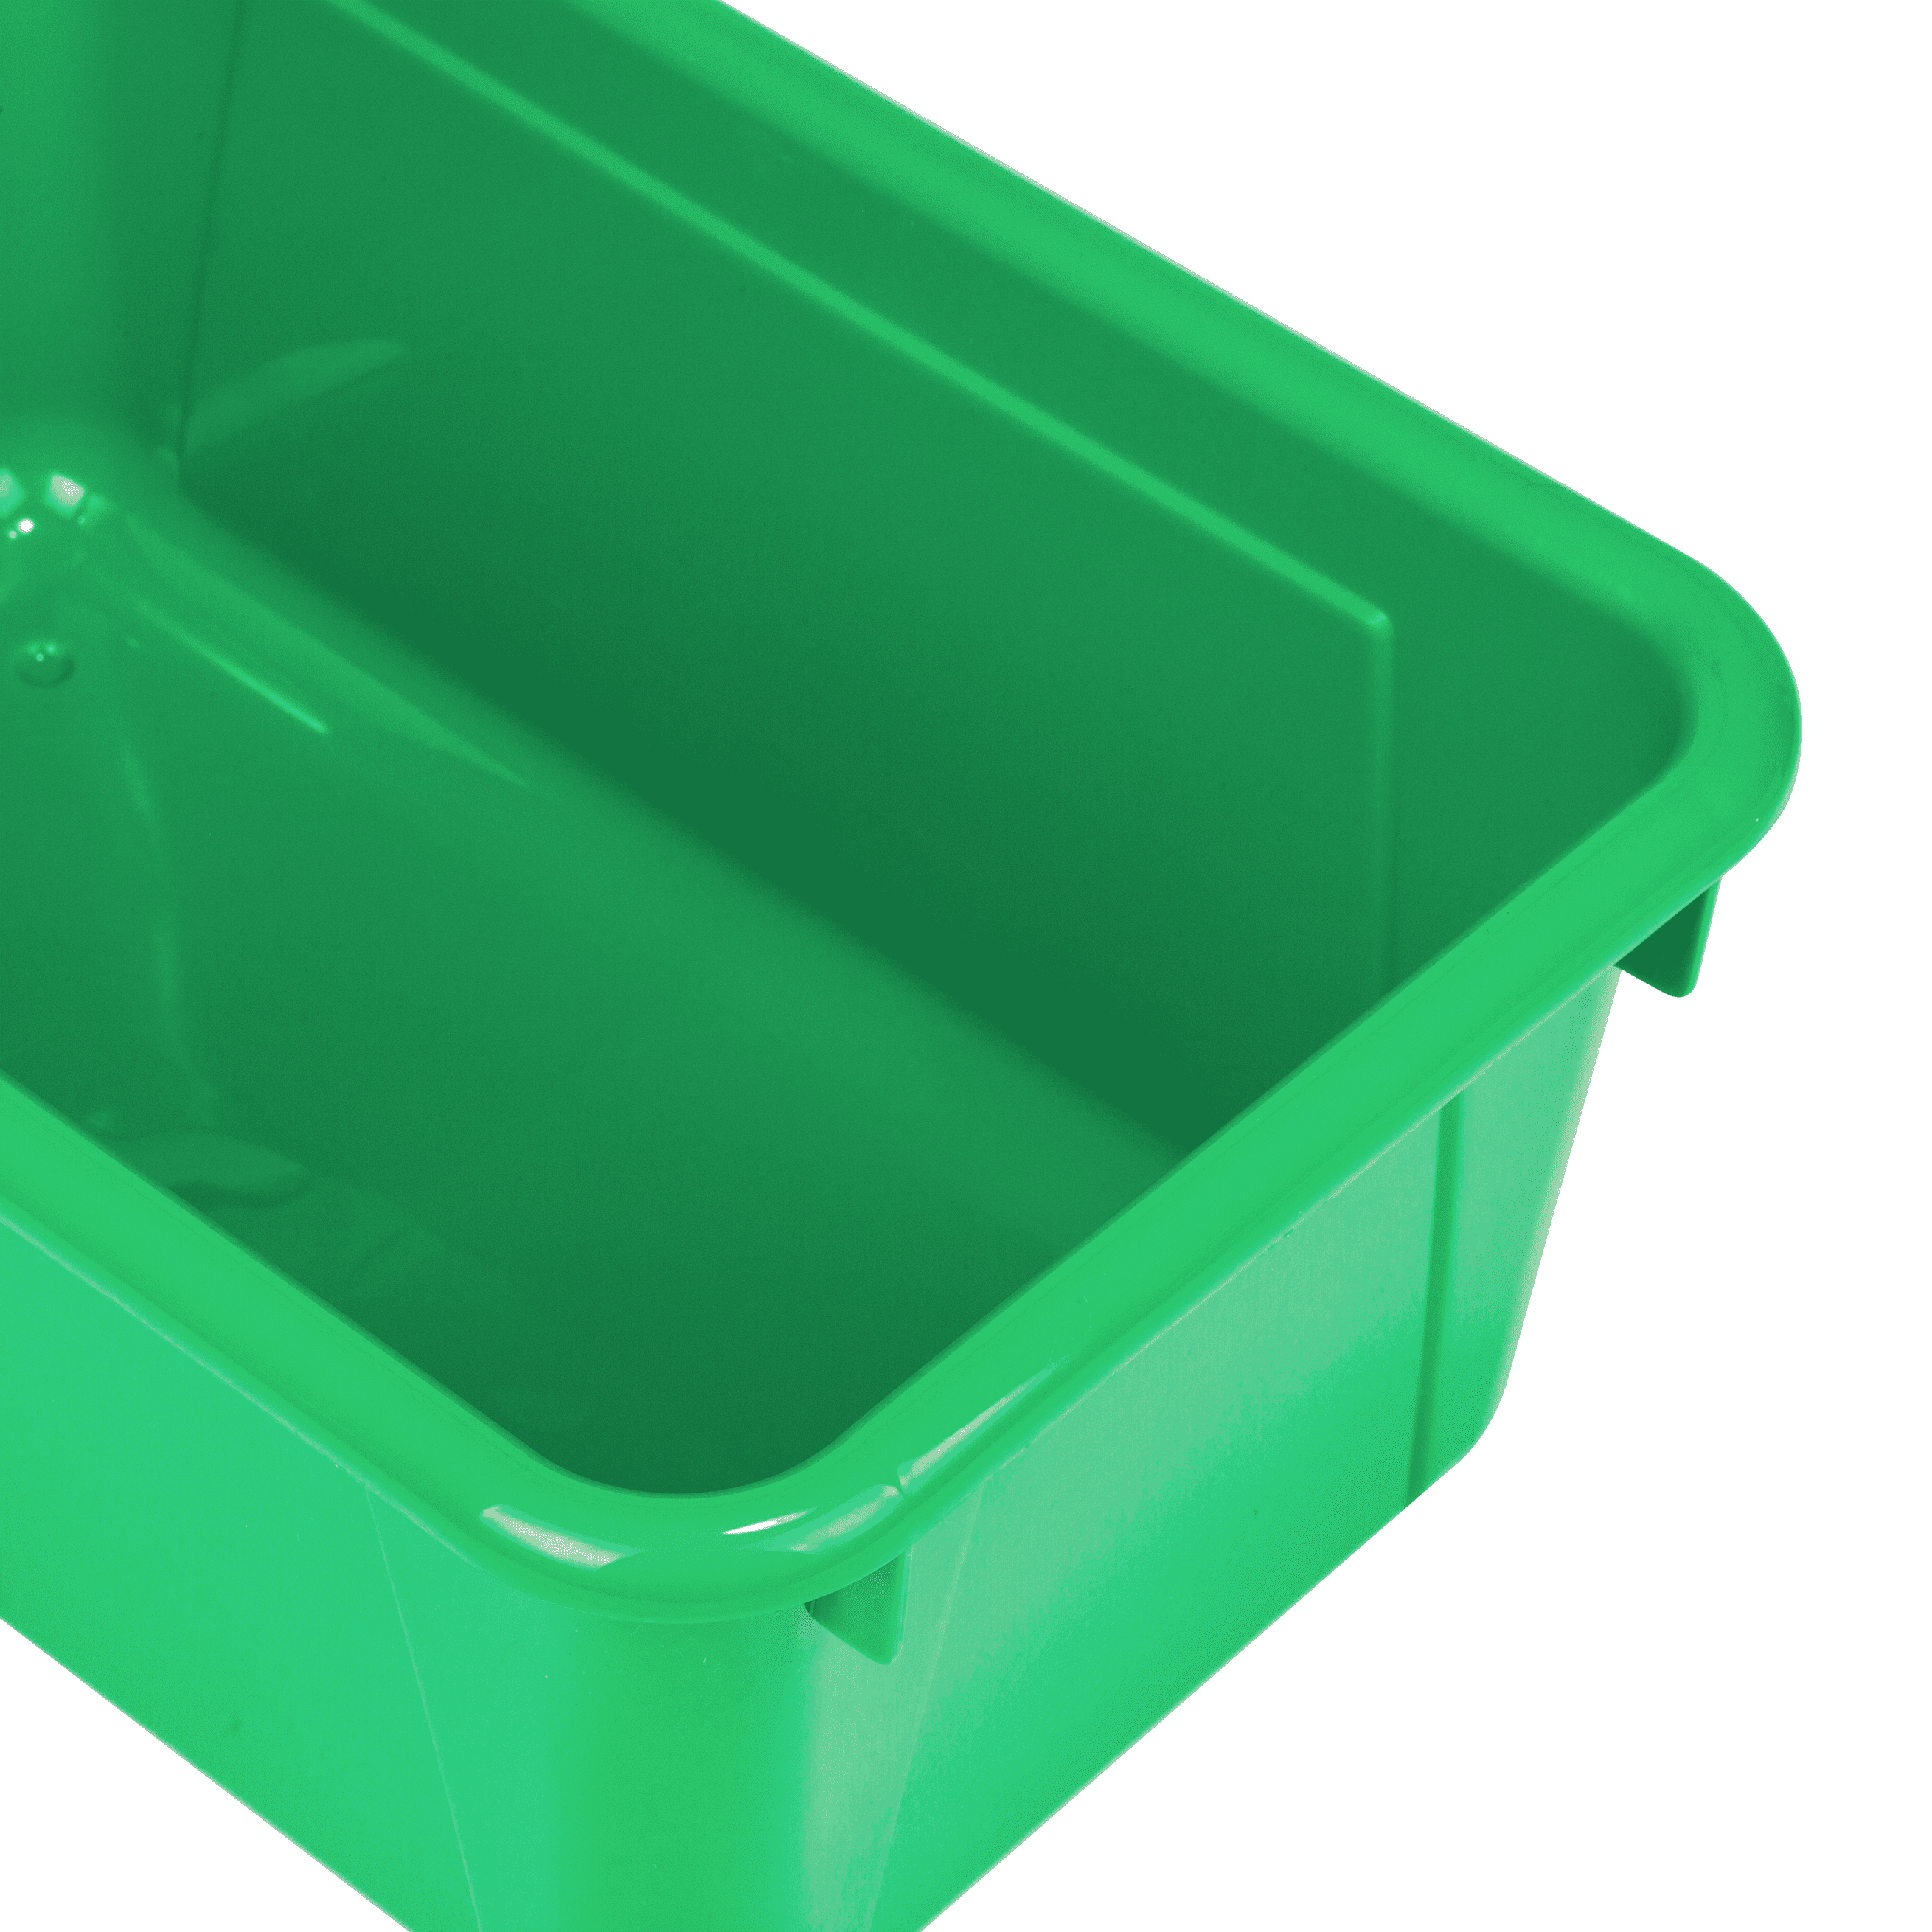 Storex Small Cubby Bin, Classroom Green, 5-Pack